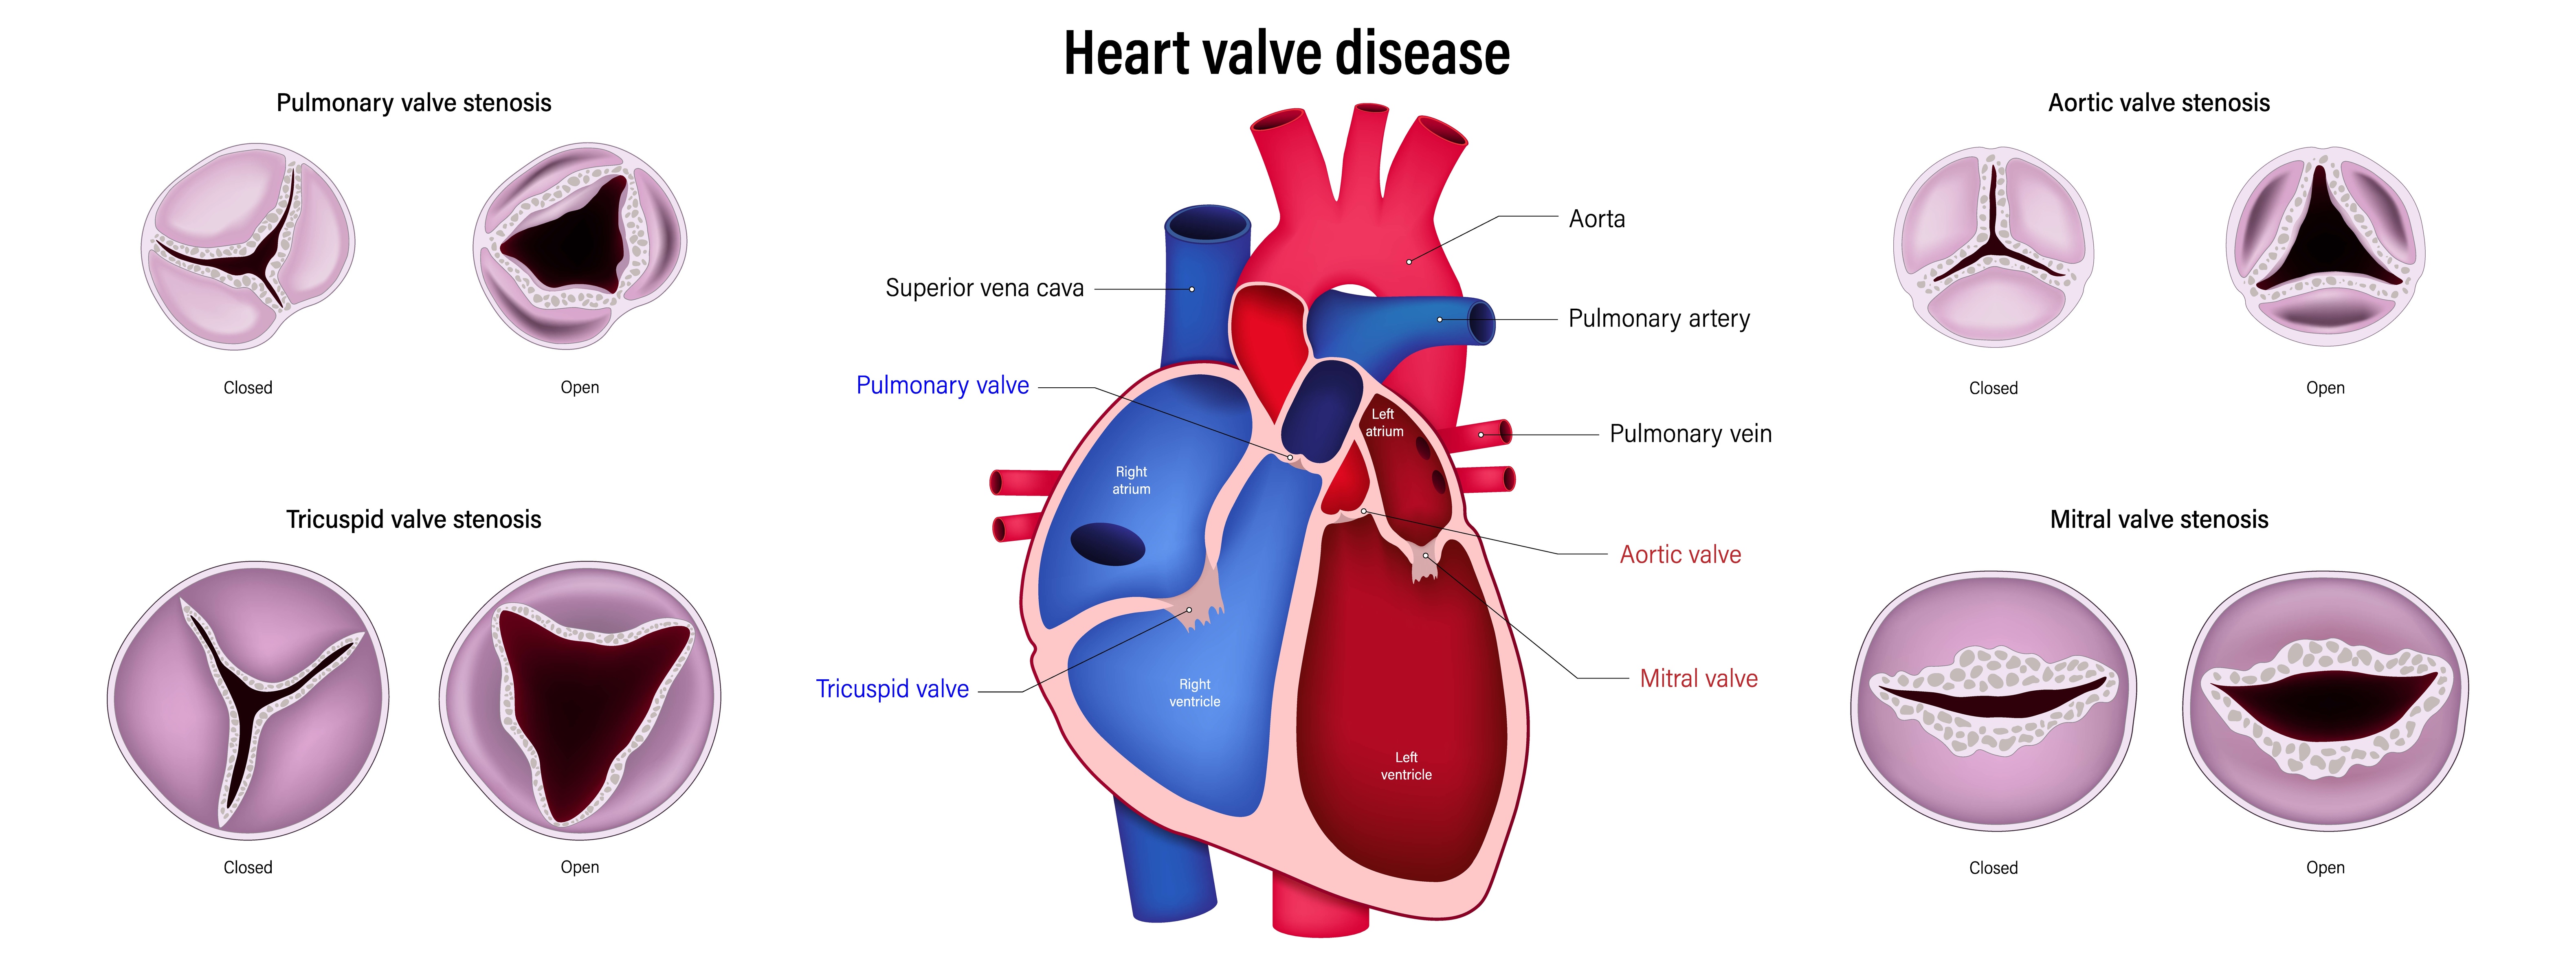 Understanding heart valve diseases and treatment options